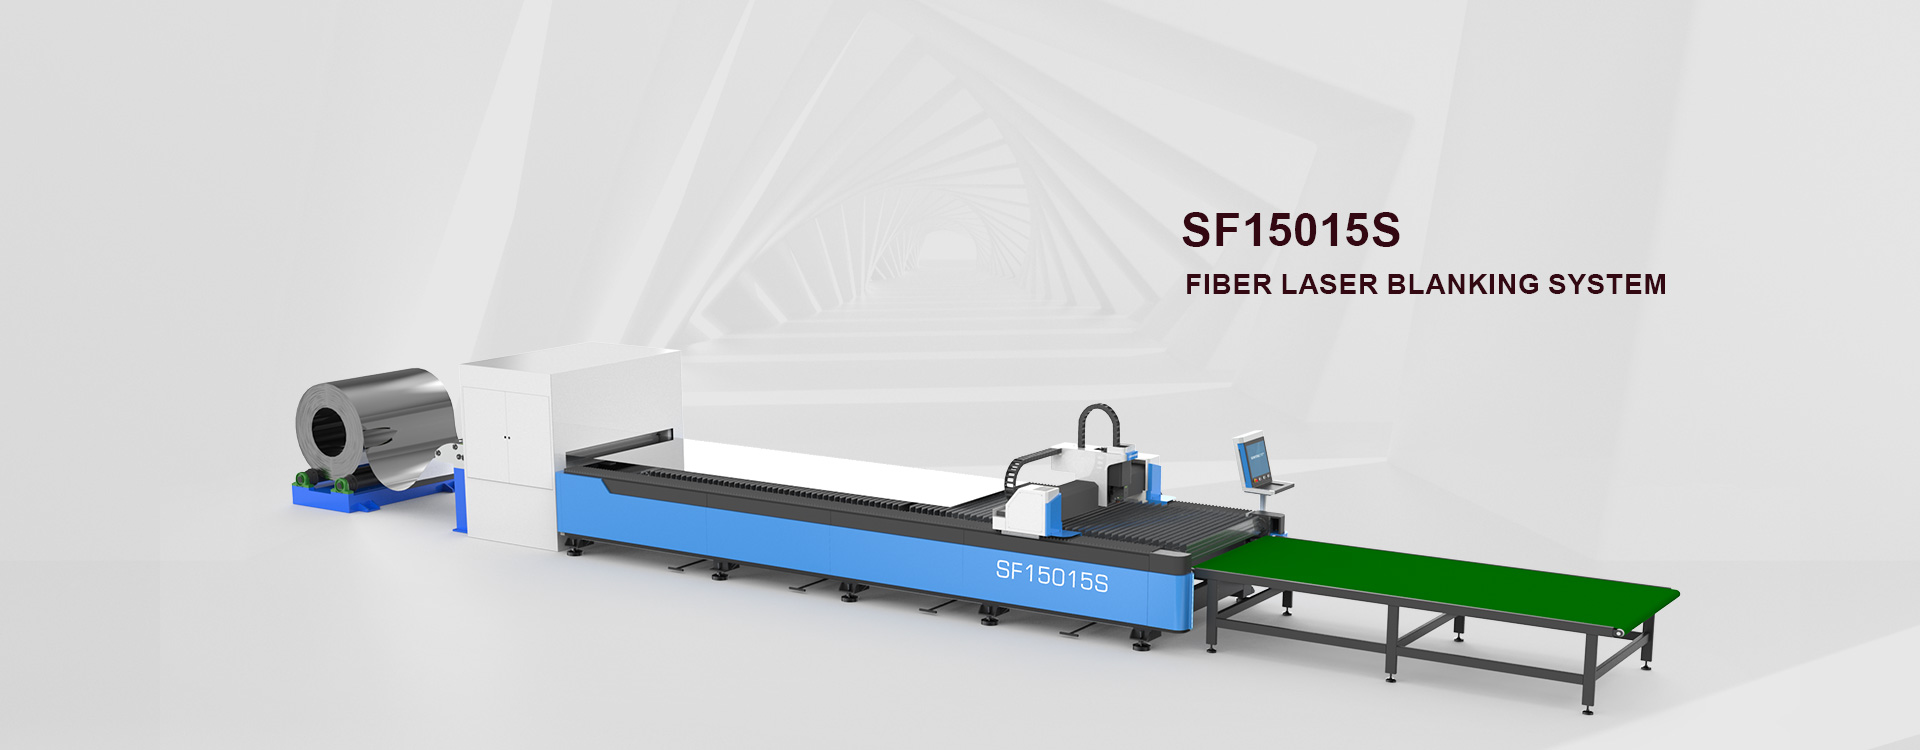 Fiber Laser Blanking System SF15015S